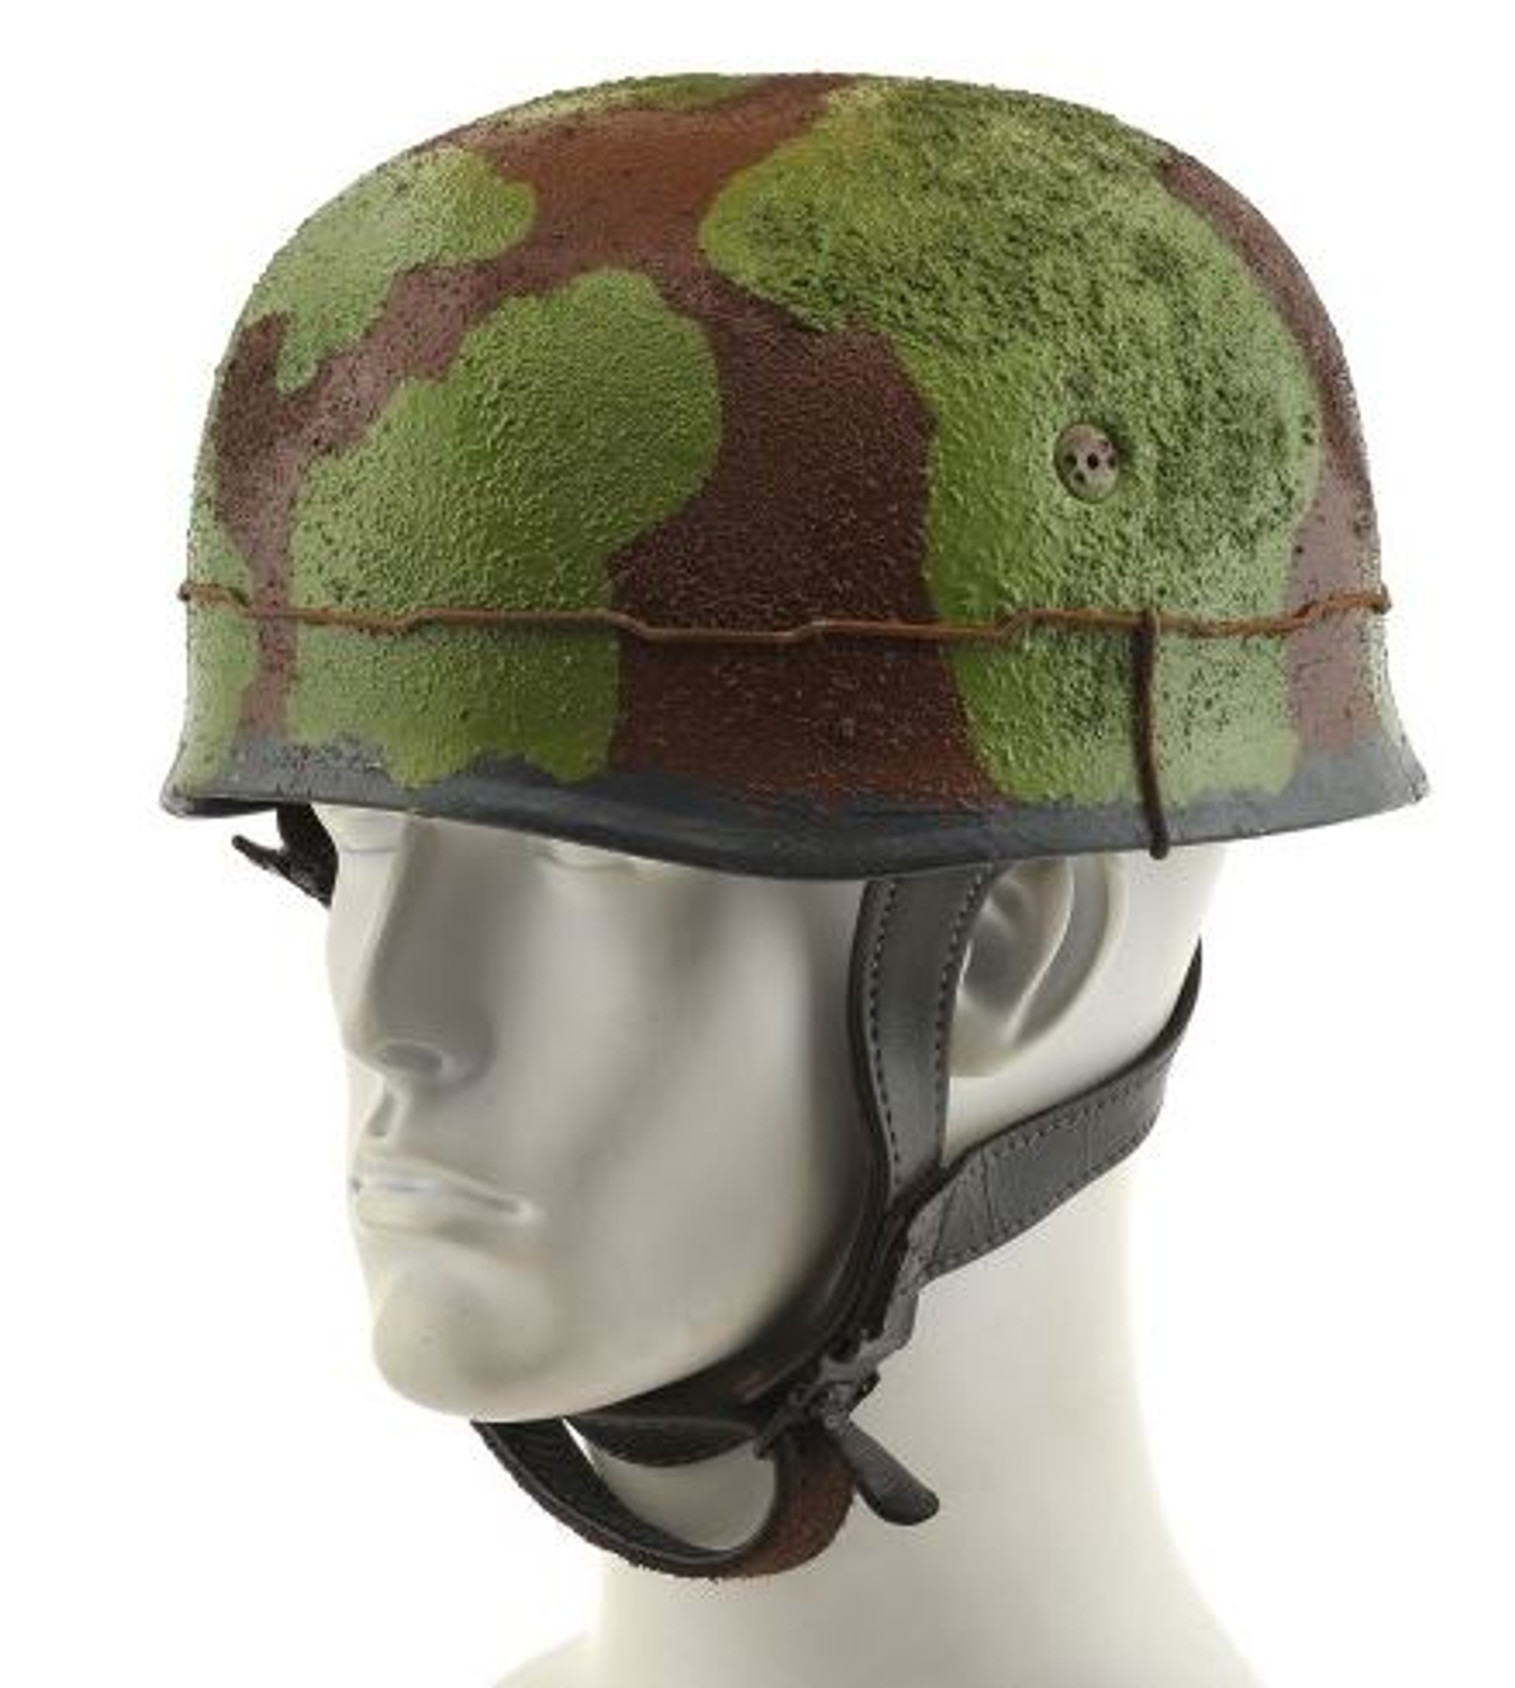 GERMAN WW2 PARATROOPER M38 FALLSCHIRMJAGER HELMET Green Brown Camouflage with texture wire